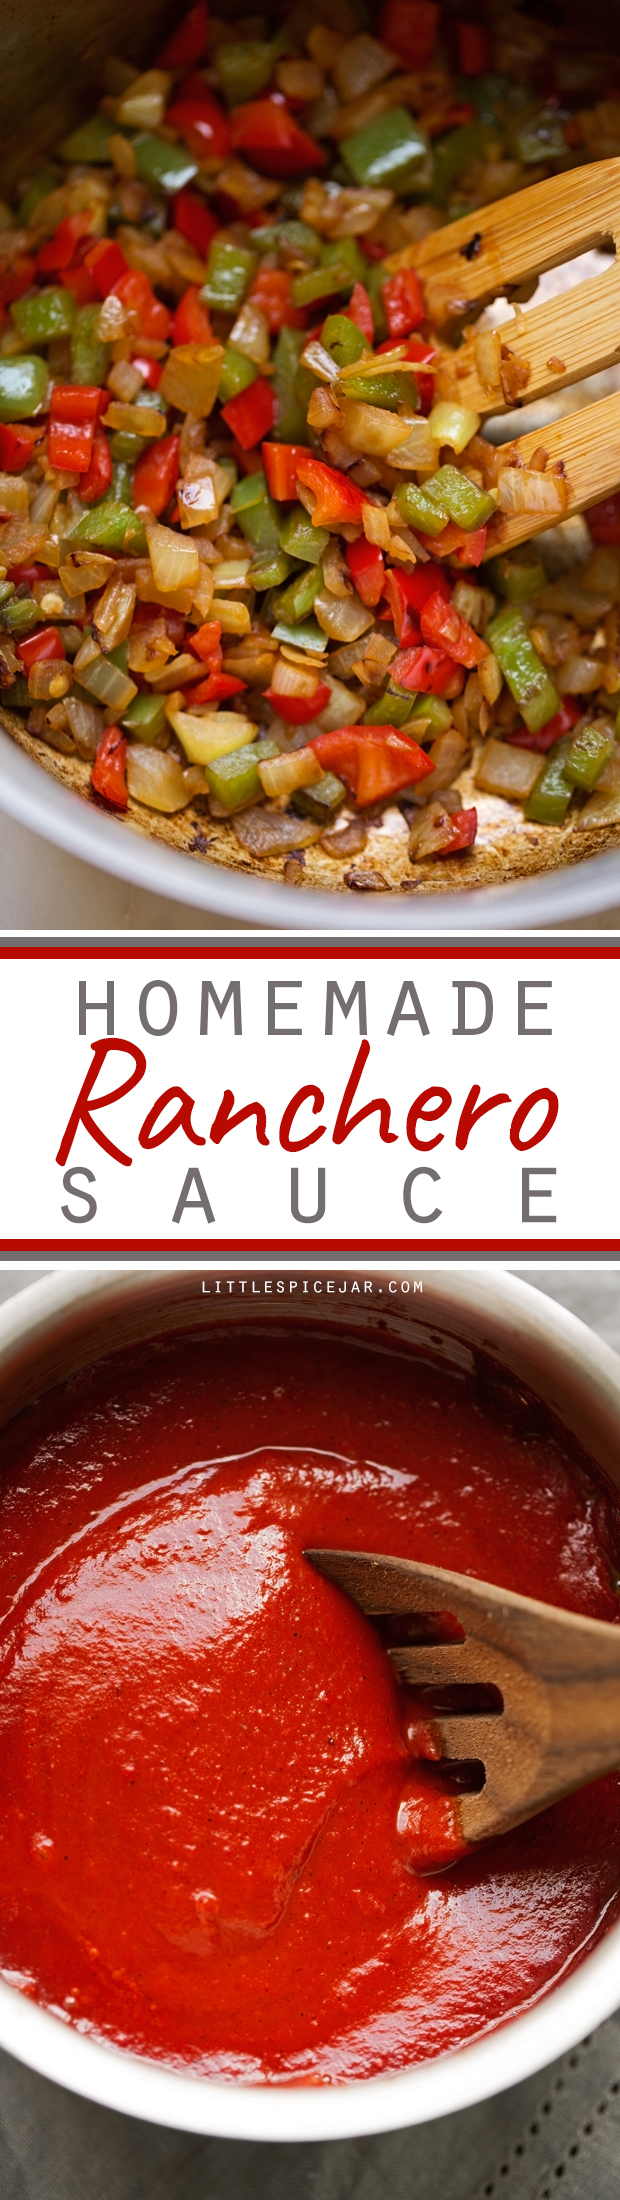 Ranchero Sauce - A simple recipe to make homemade ranchero sauce! This sauce is amazing on huevos rancheros, to dip your breakfast tacos in, or to use as enchilada sauce in casseroles! #rancherosauce #huevosrancheros #tacosauce | Littlespicejar.com